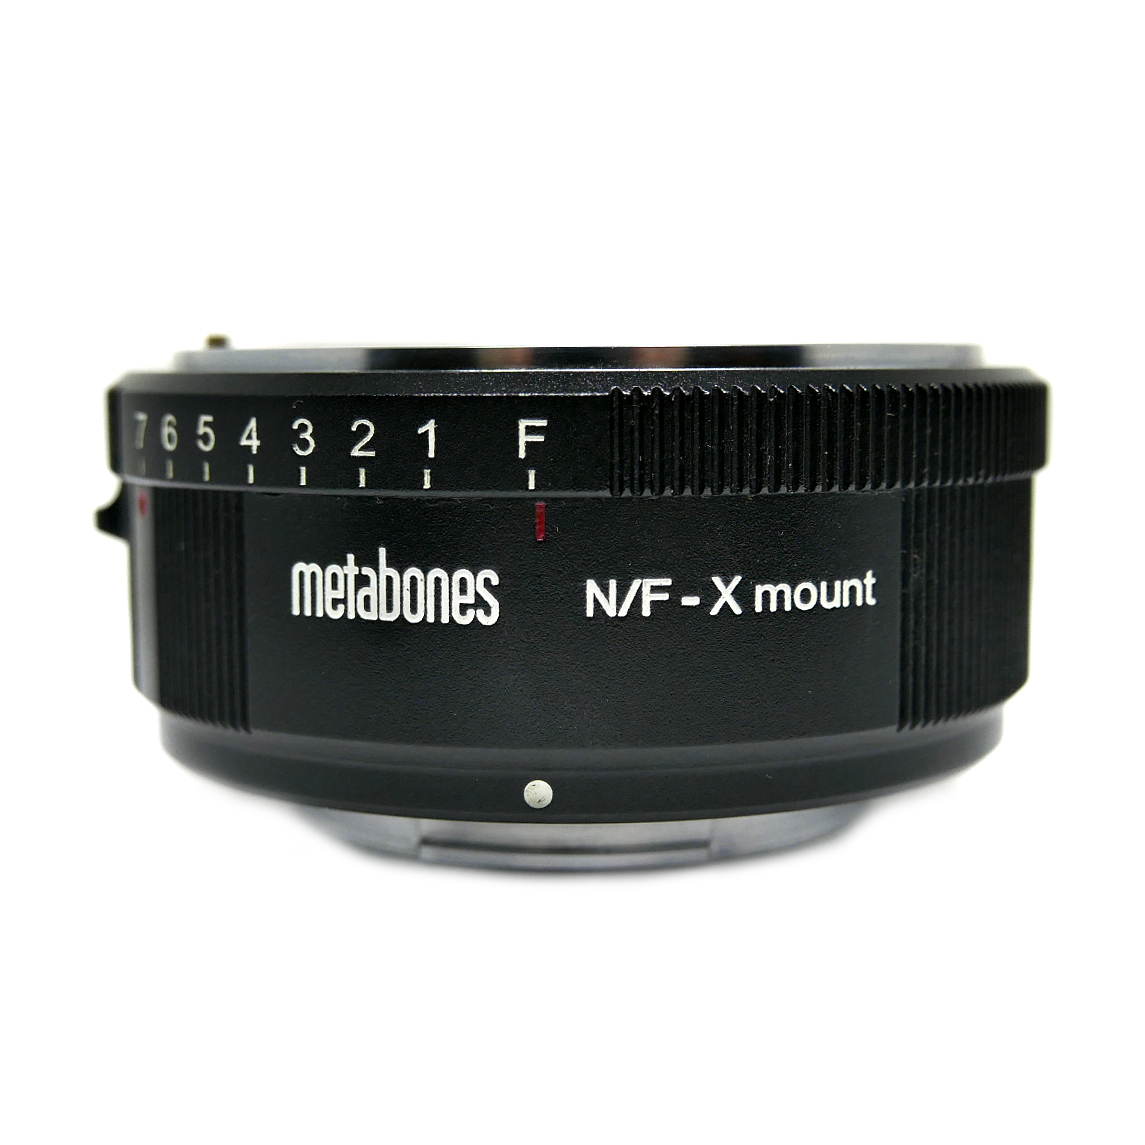 Metabones N/F-X Mount adapteri (käytetty)